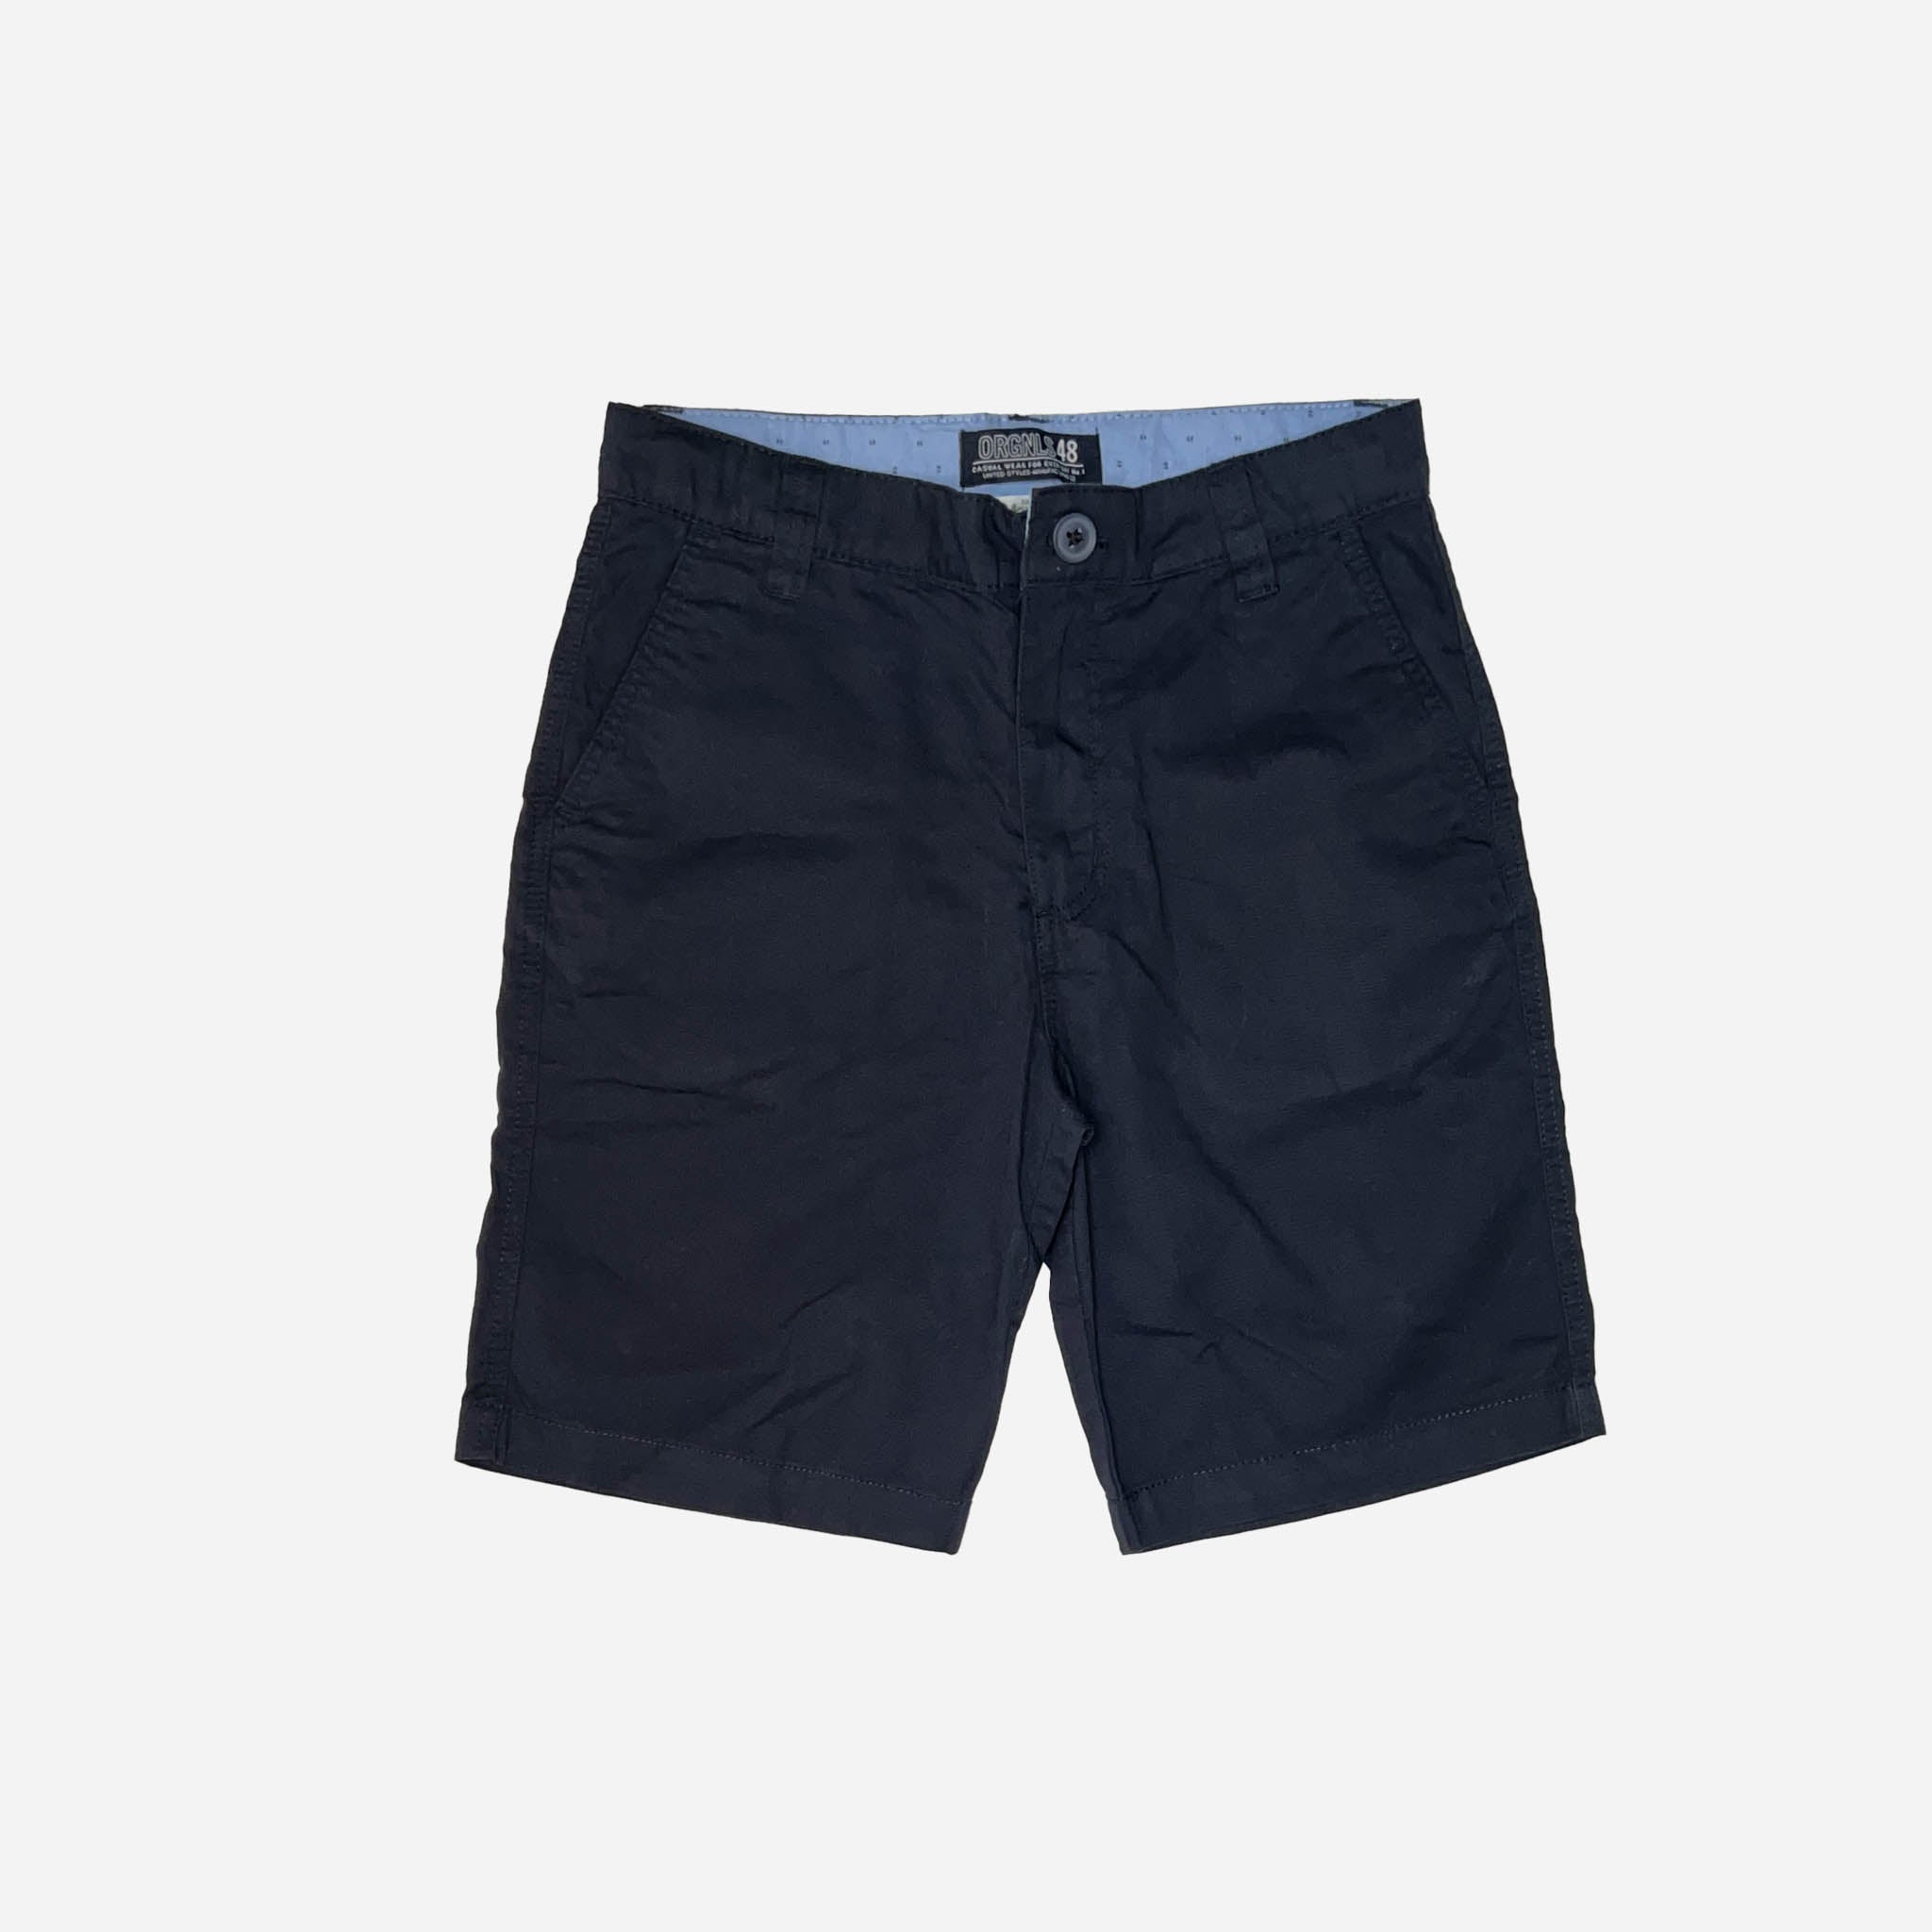 Navy Chino Shorts - 9/10